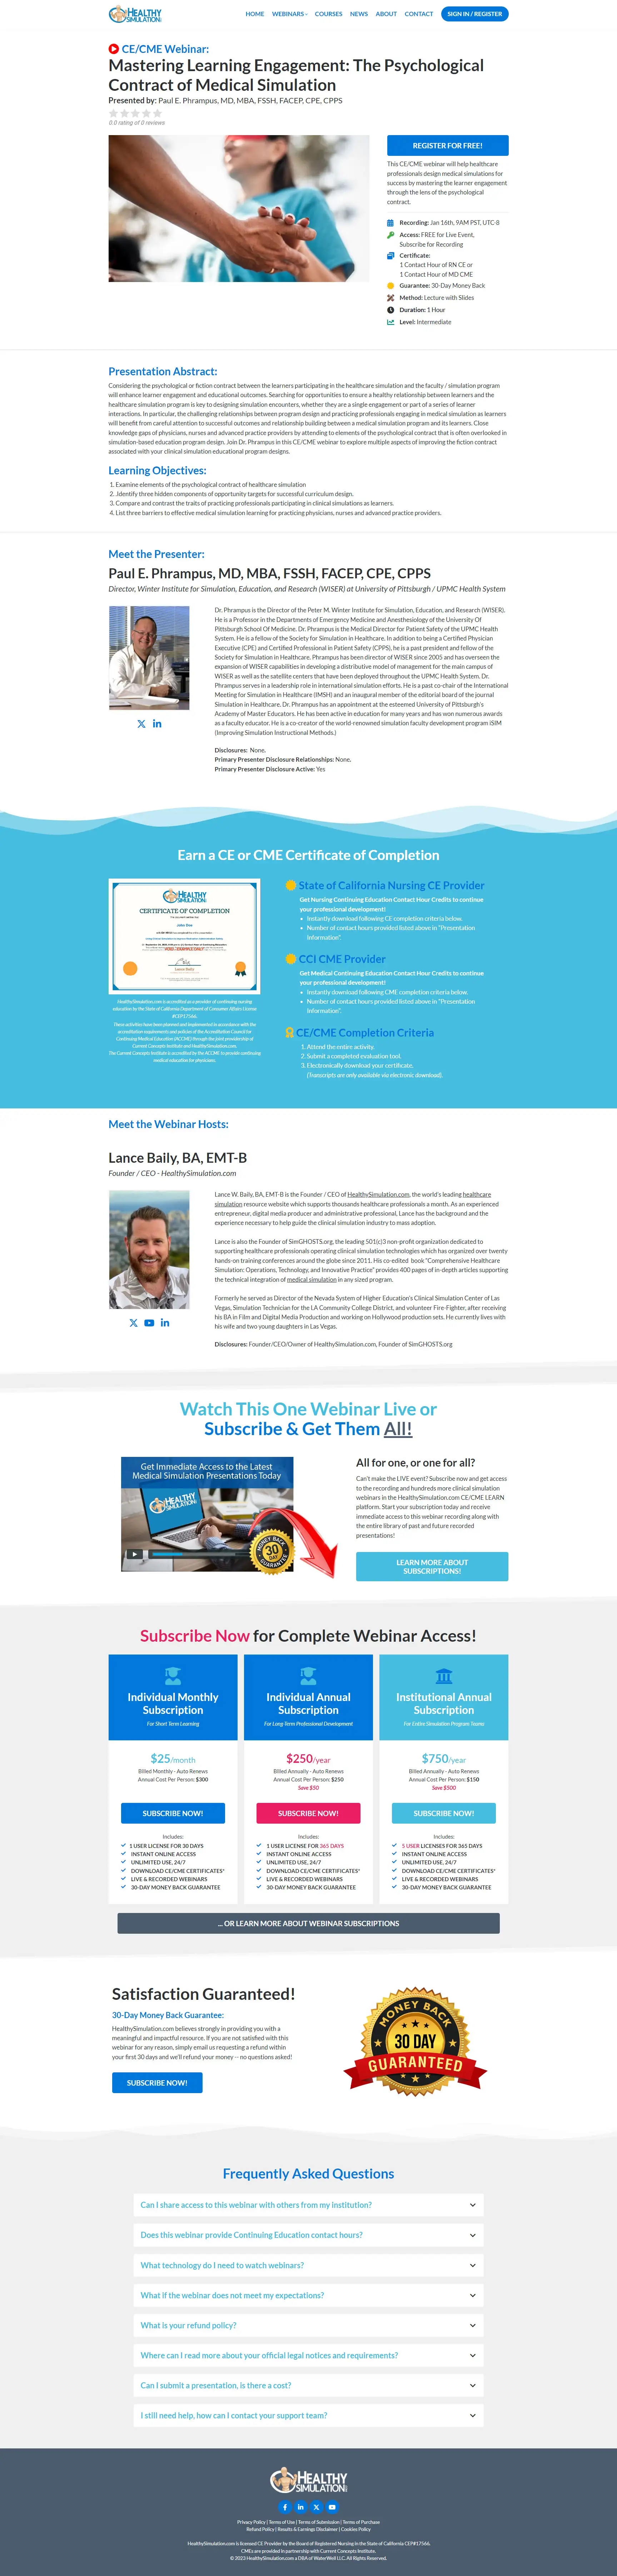 HealthySimulation.com - LearnWorlds Website - Presentation Page